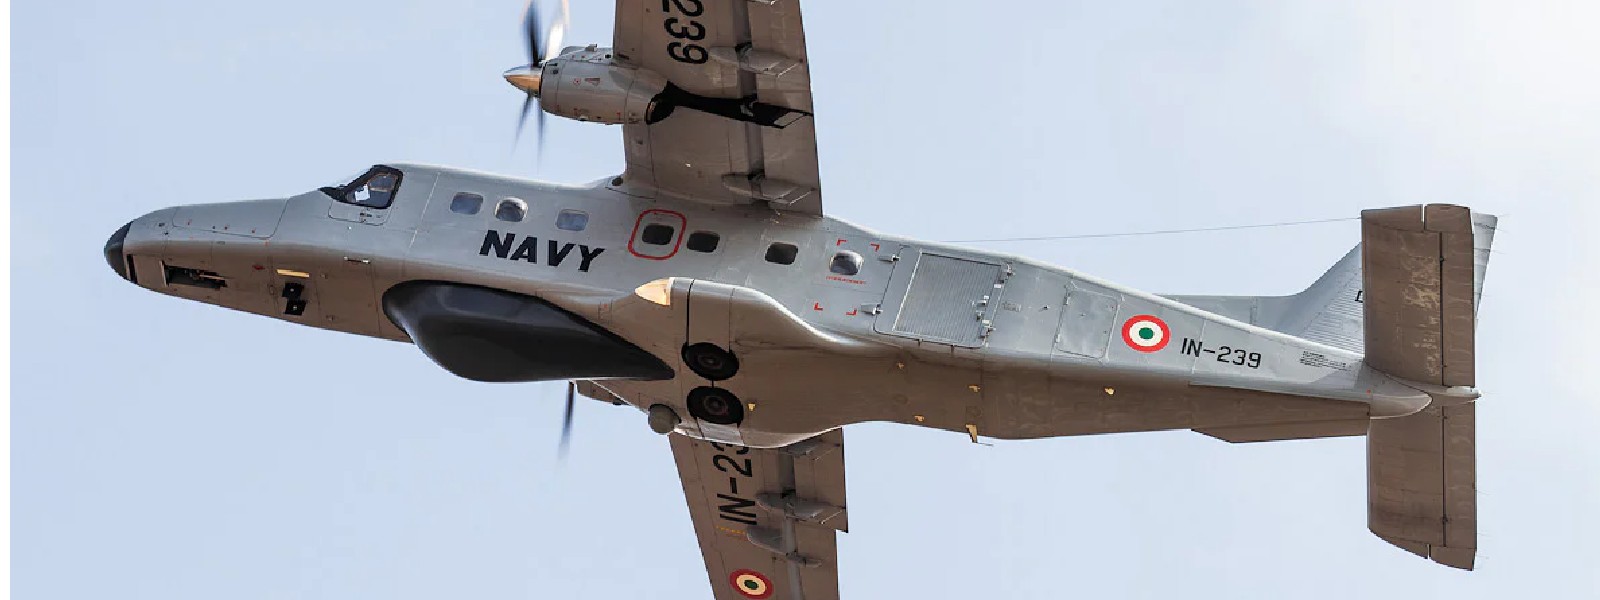 India to deliver Dornier Reconnaissance aircraft to Sri Lanka on Monday (15)